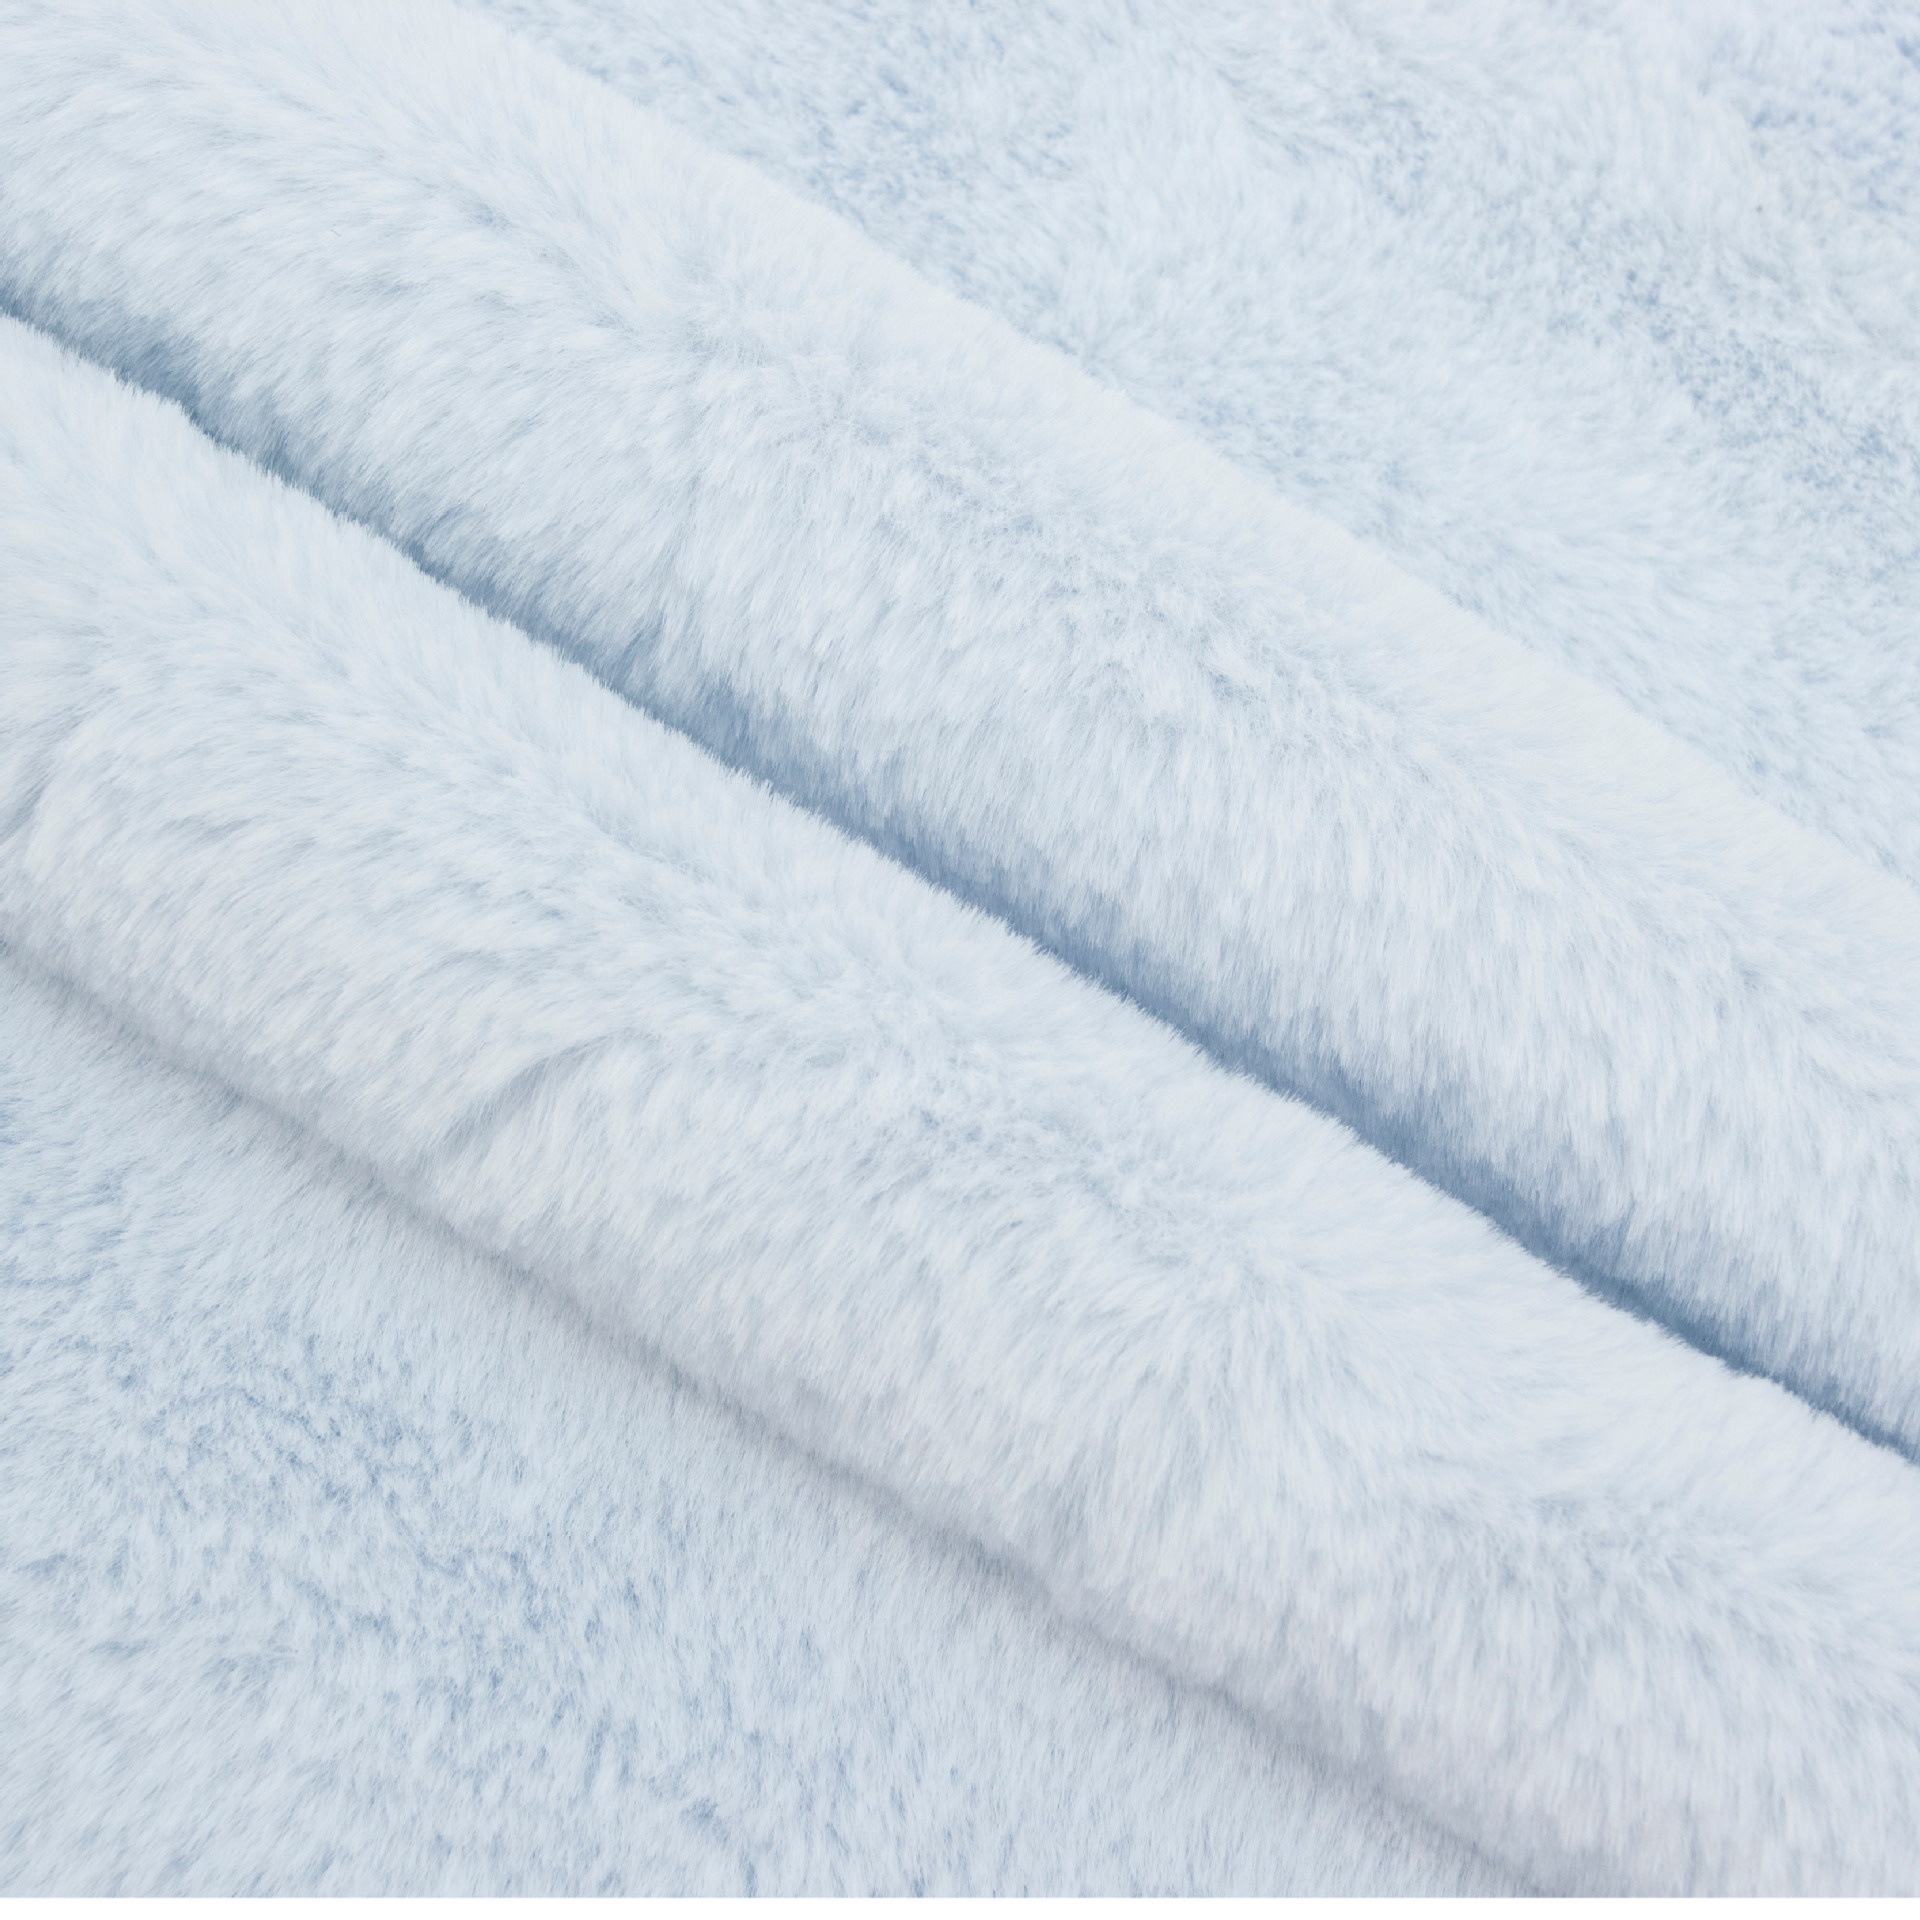 Rabbit Fur Short Plush Fabric Thickened Dehaired Angora New Rabbit Fur Toy Clothing Fabric Multi-Purpose Coated Plush